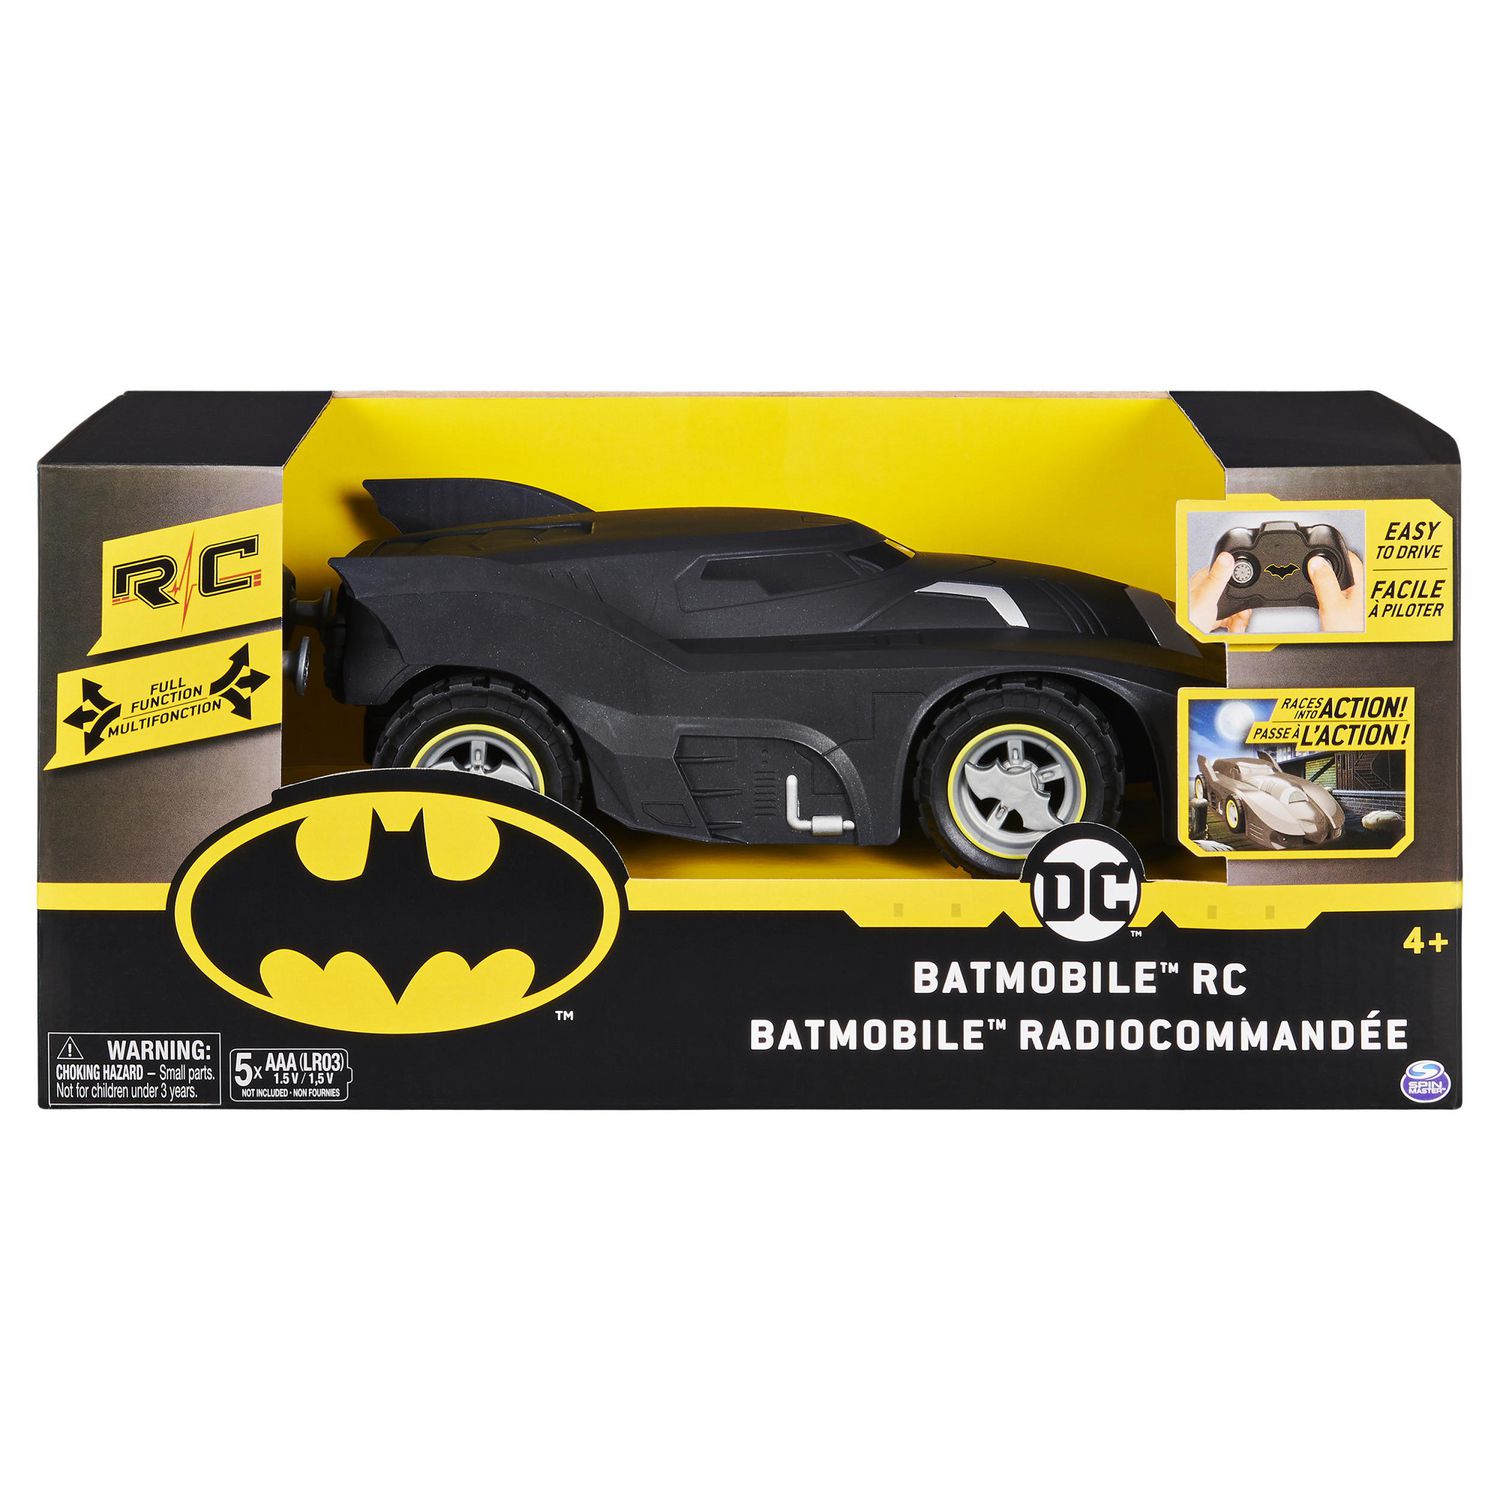 BATMAN Batmobile Remote Control Vehicle 1:20 Scale, Kids Toys for